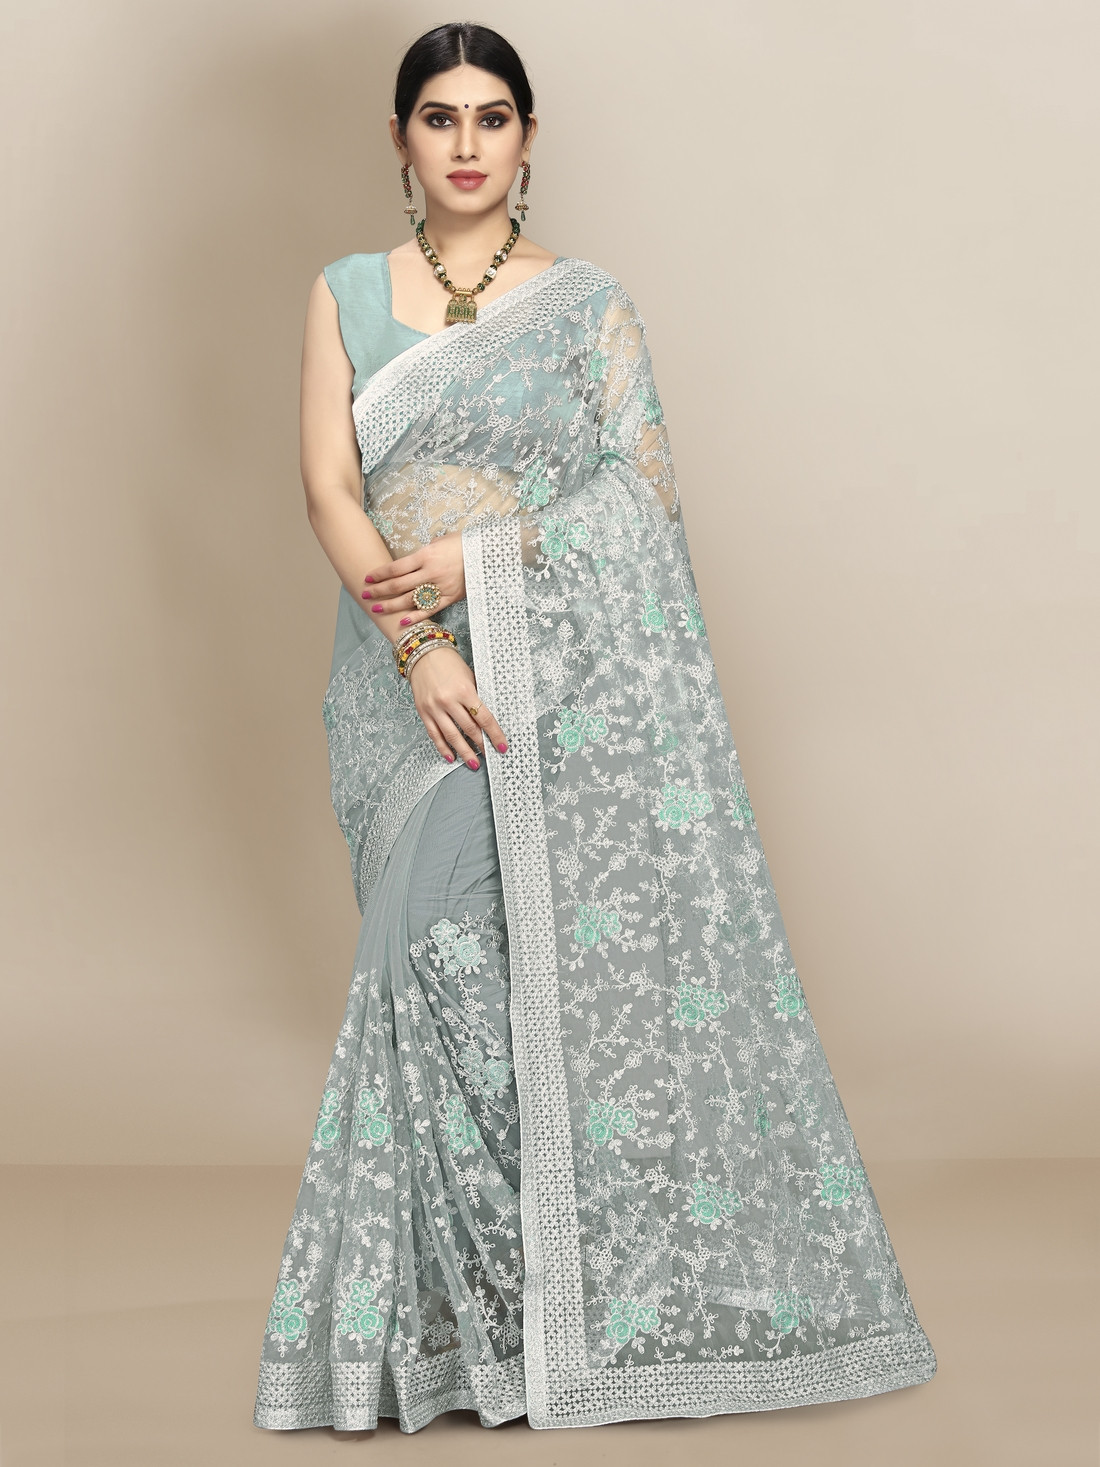 Super Net beautiful Designer Saree with extraordinary embroidery -Blue